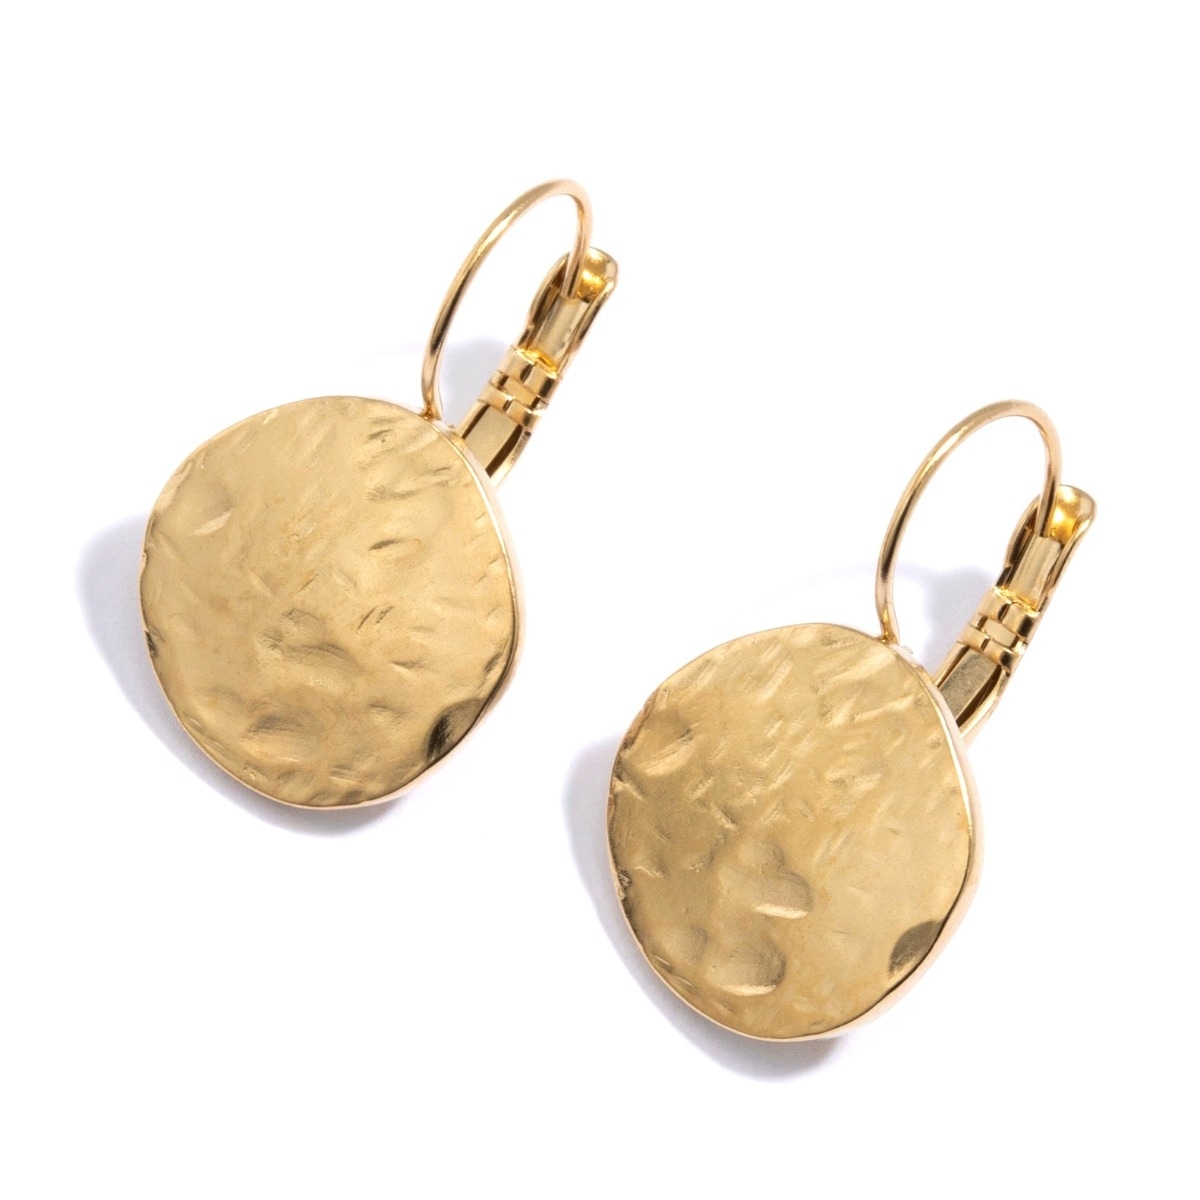 Danon Jewelry 24K Gold-Plated "Kirton" Earrings - 1